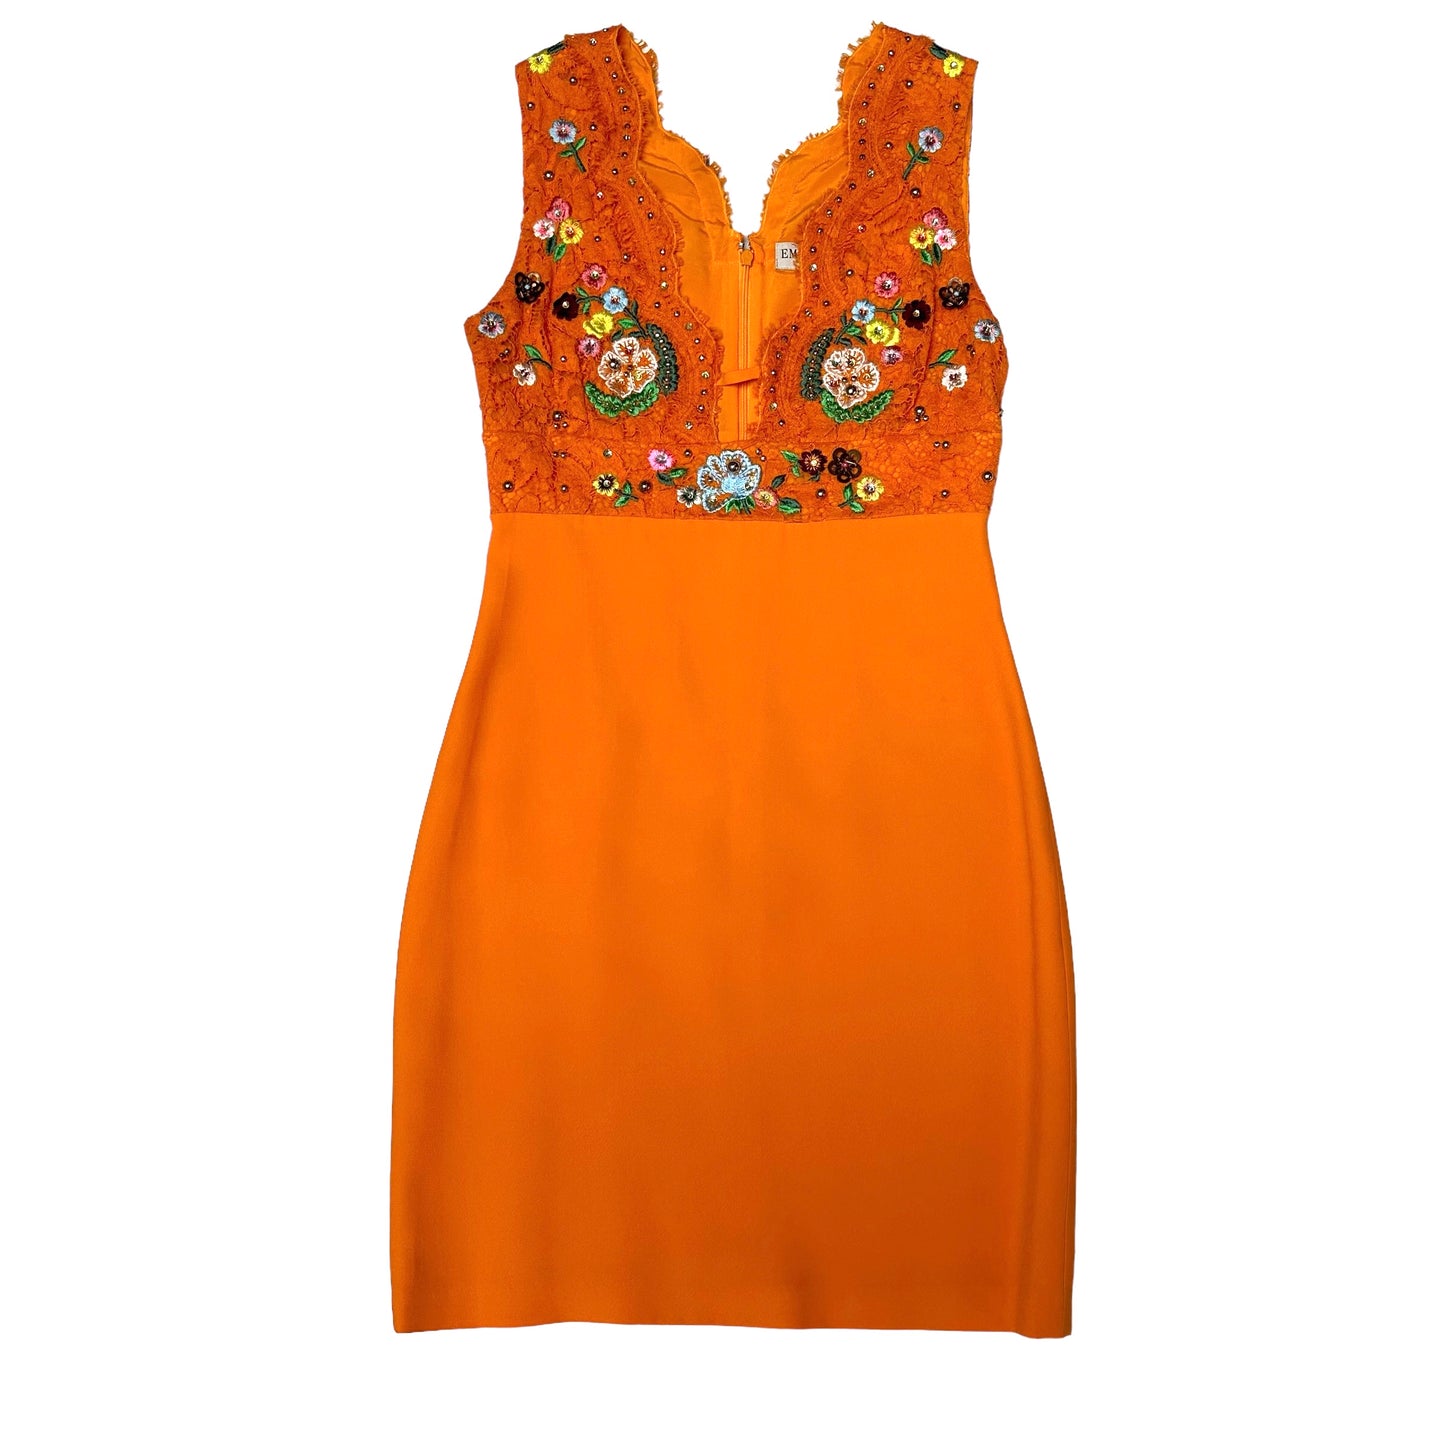 Orange Laced Dress - S